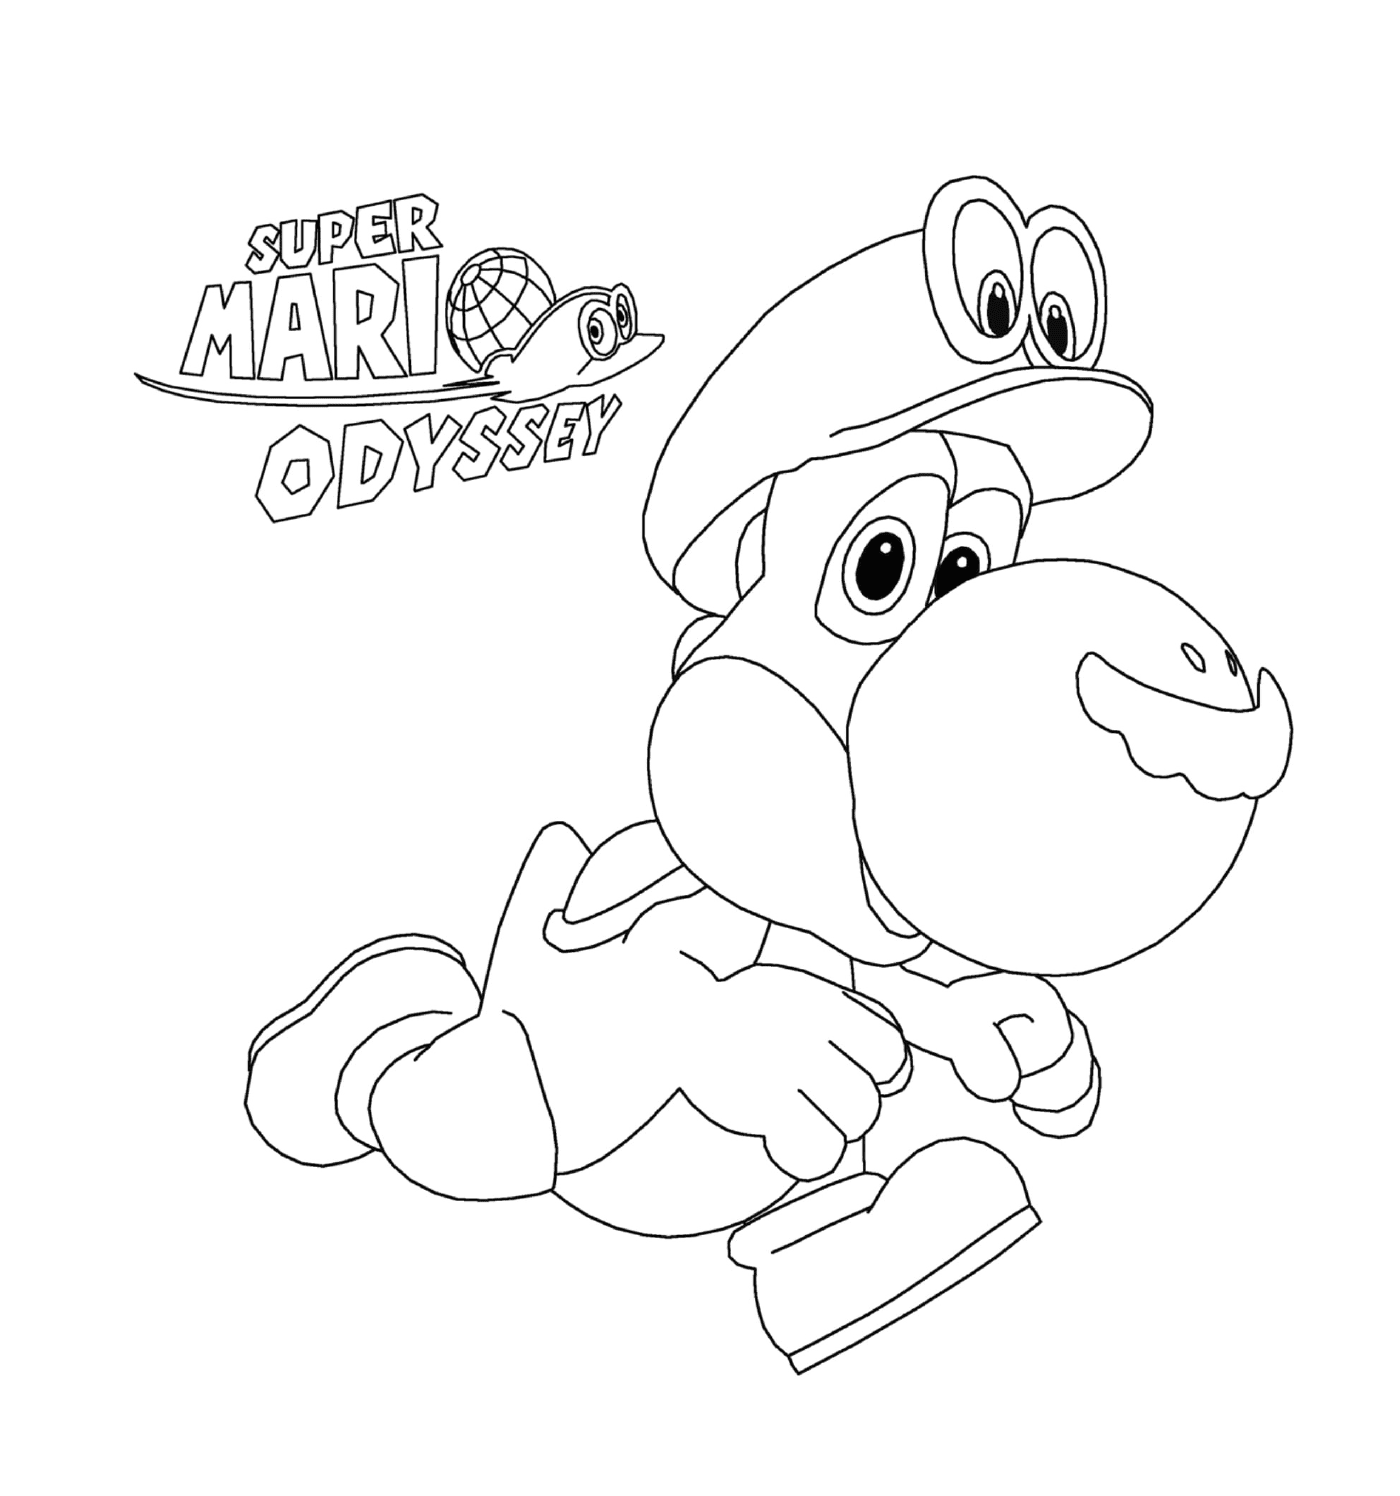   Super Mario Odyssey avec Yoshi de Nintendo 